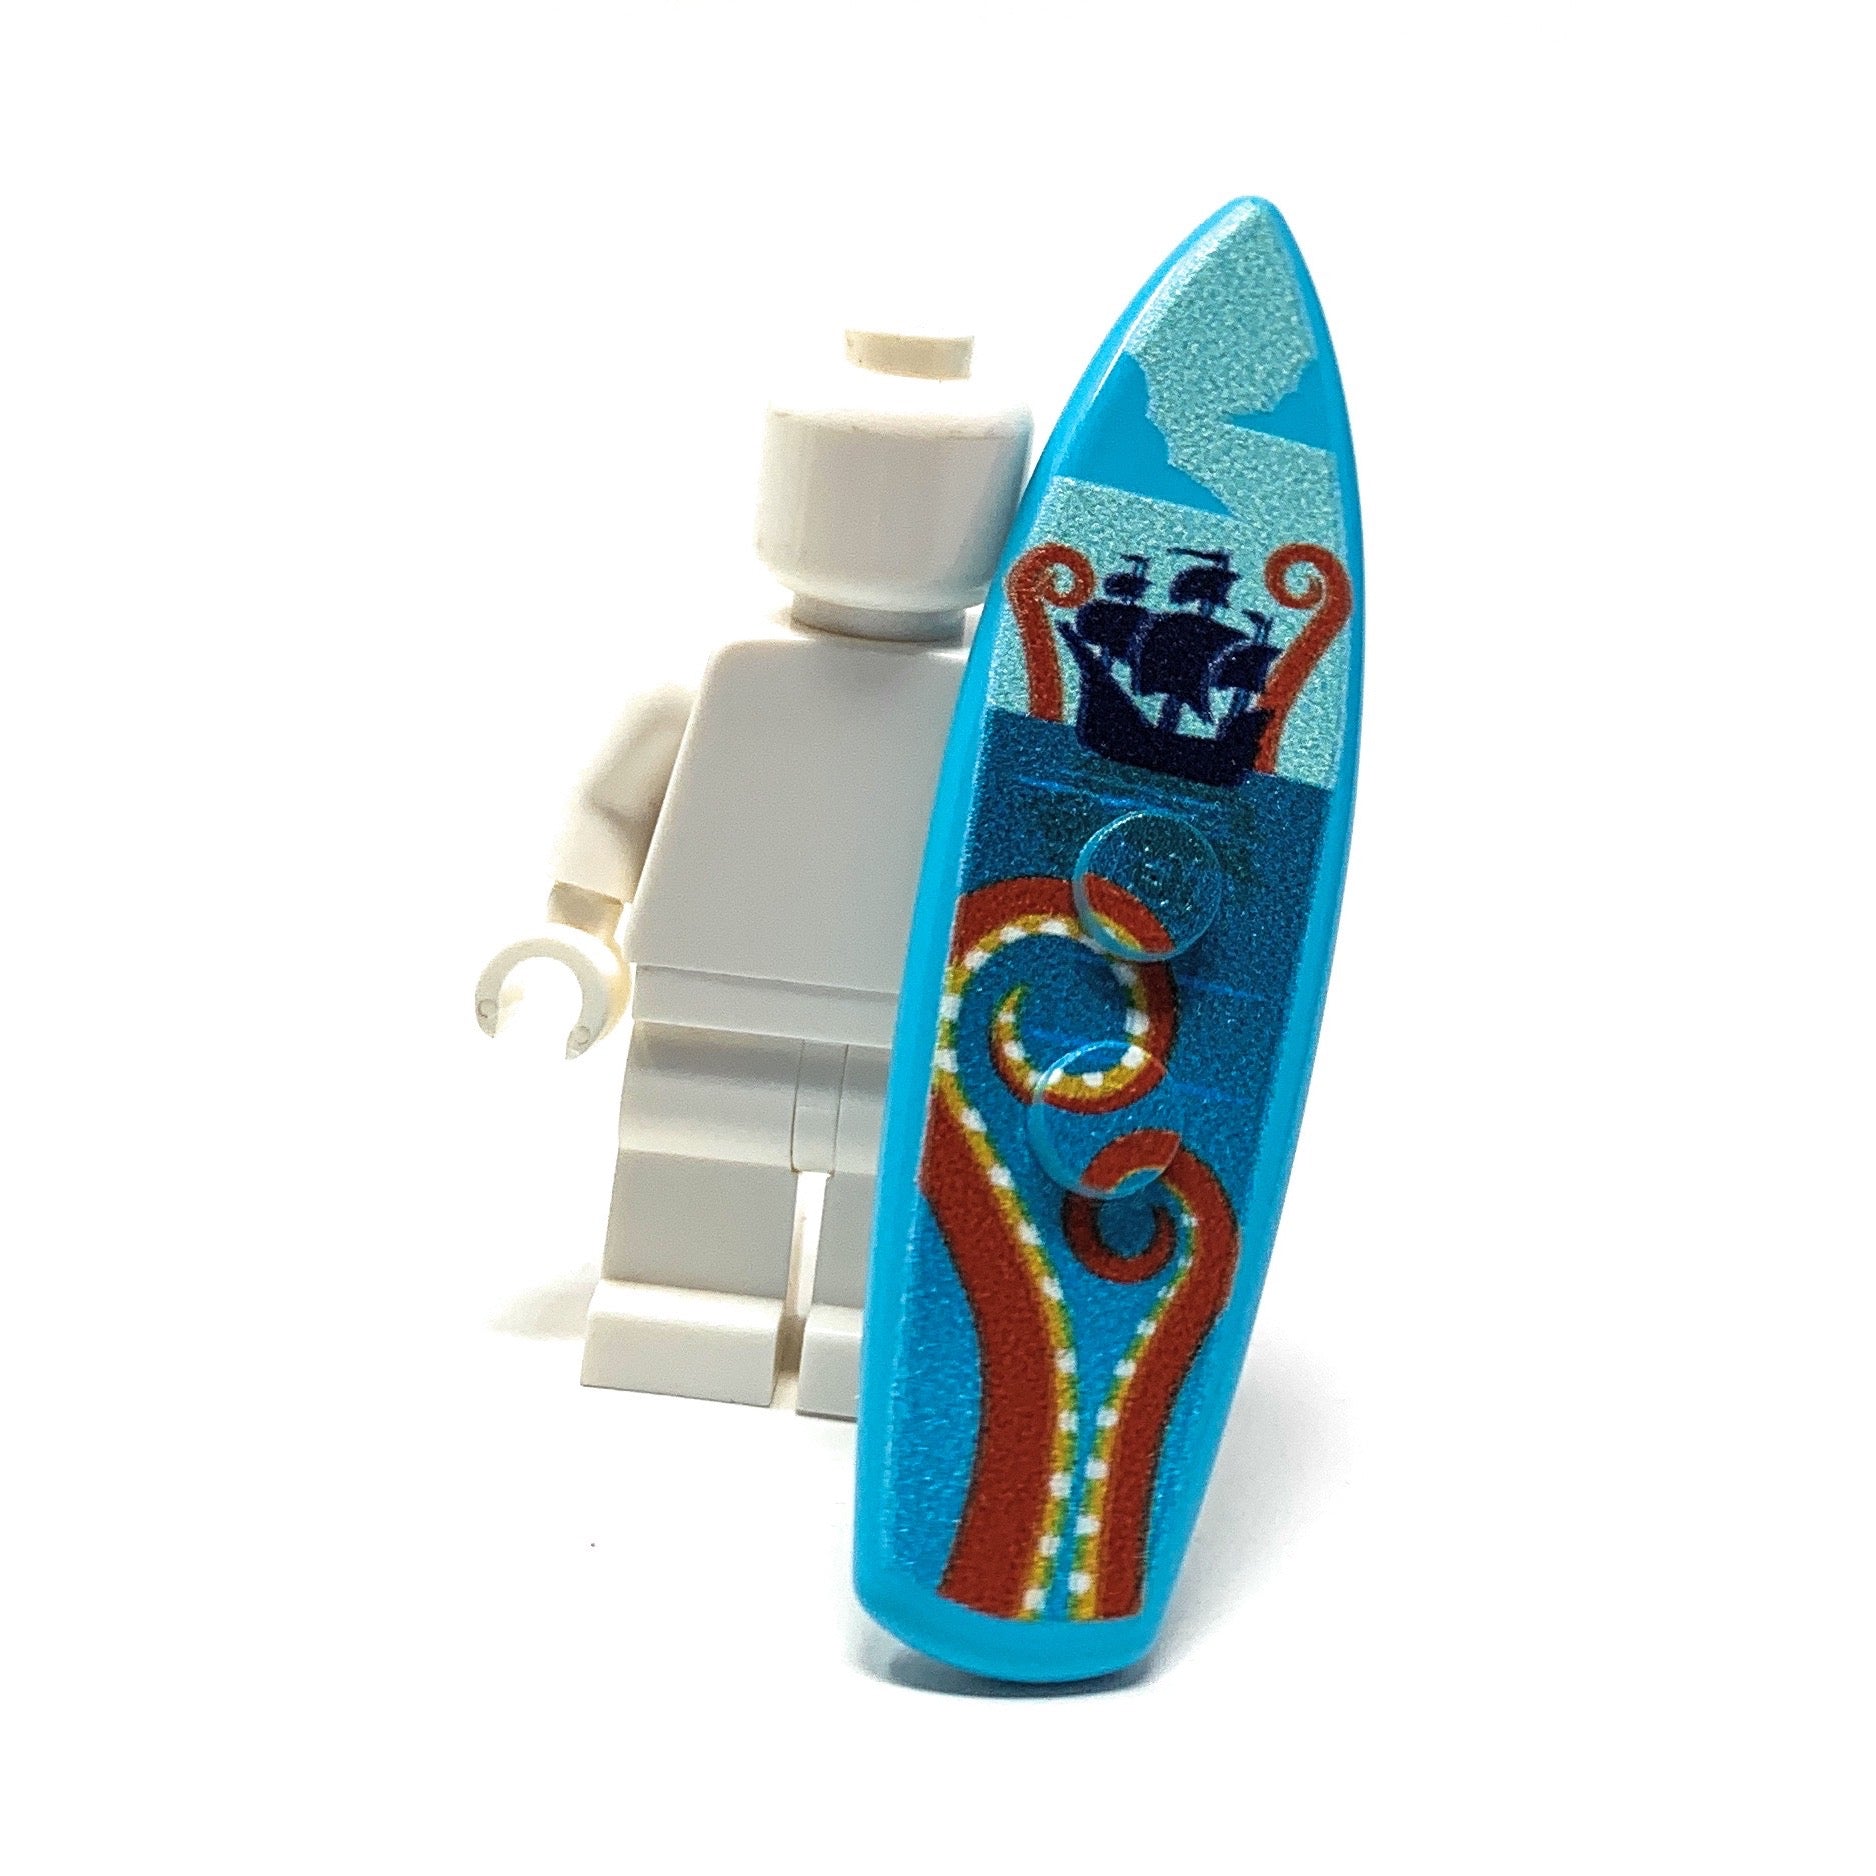 B3 Customs® Printed Kraken Surfboard made from LEGO® bricks